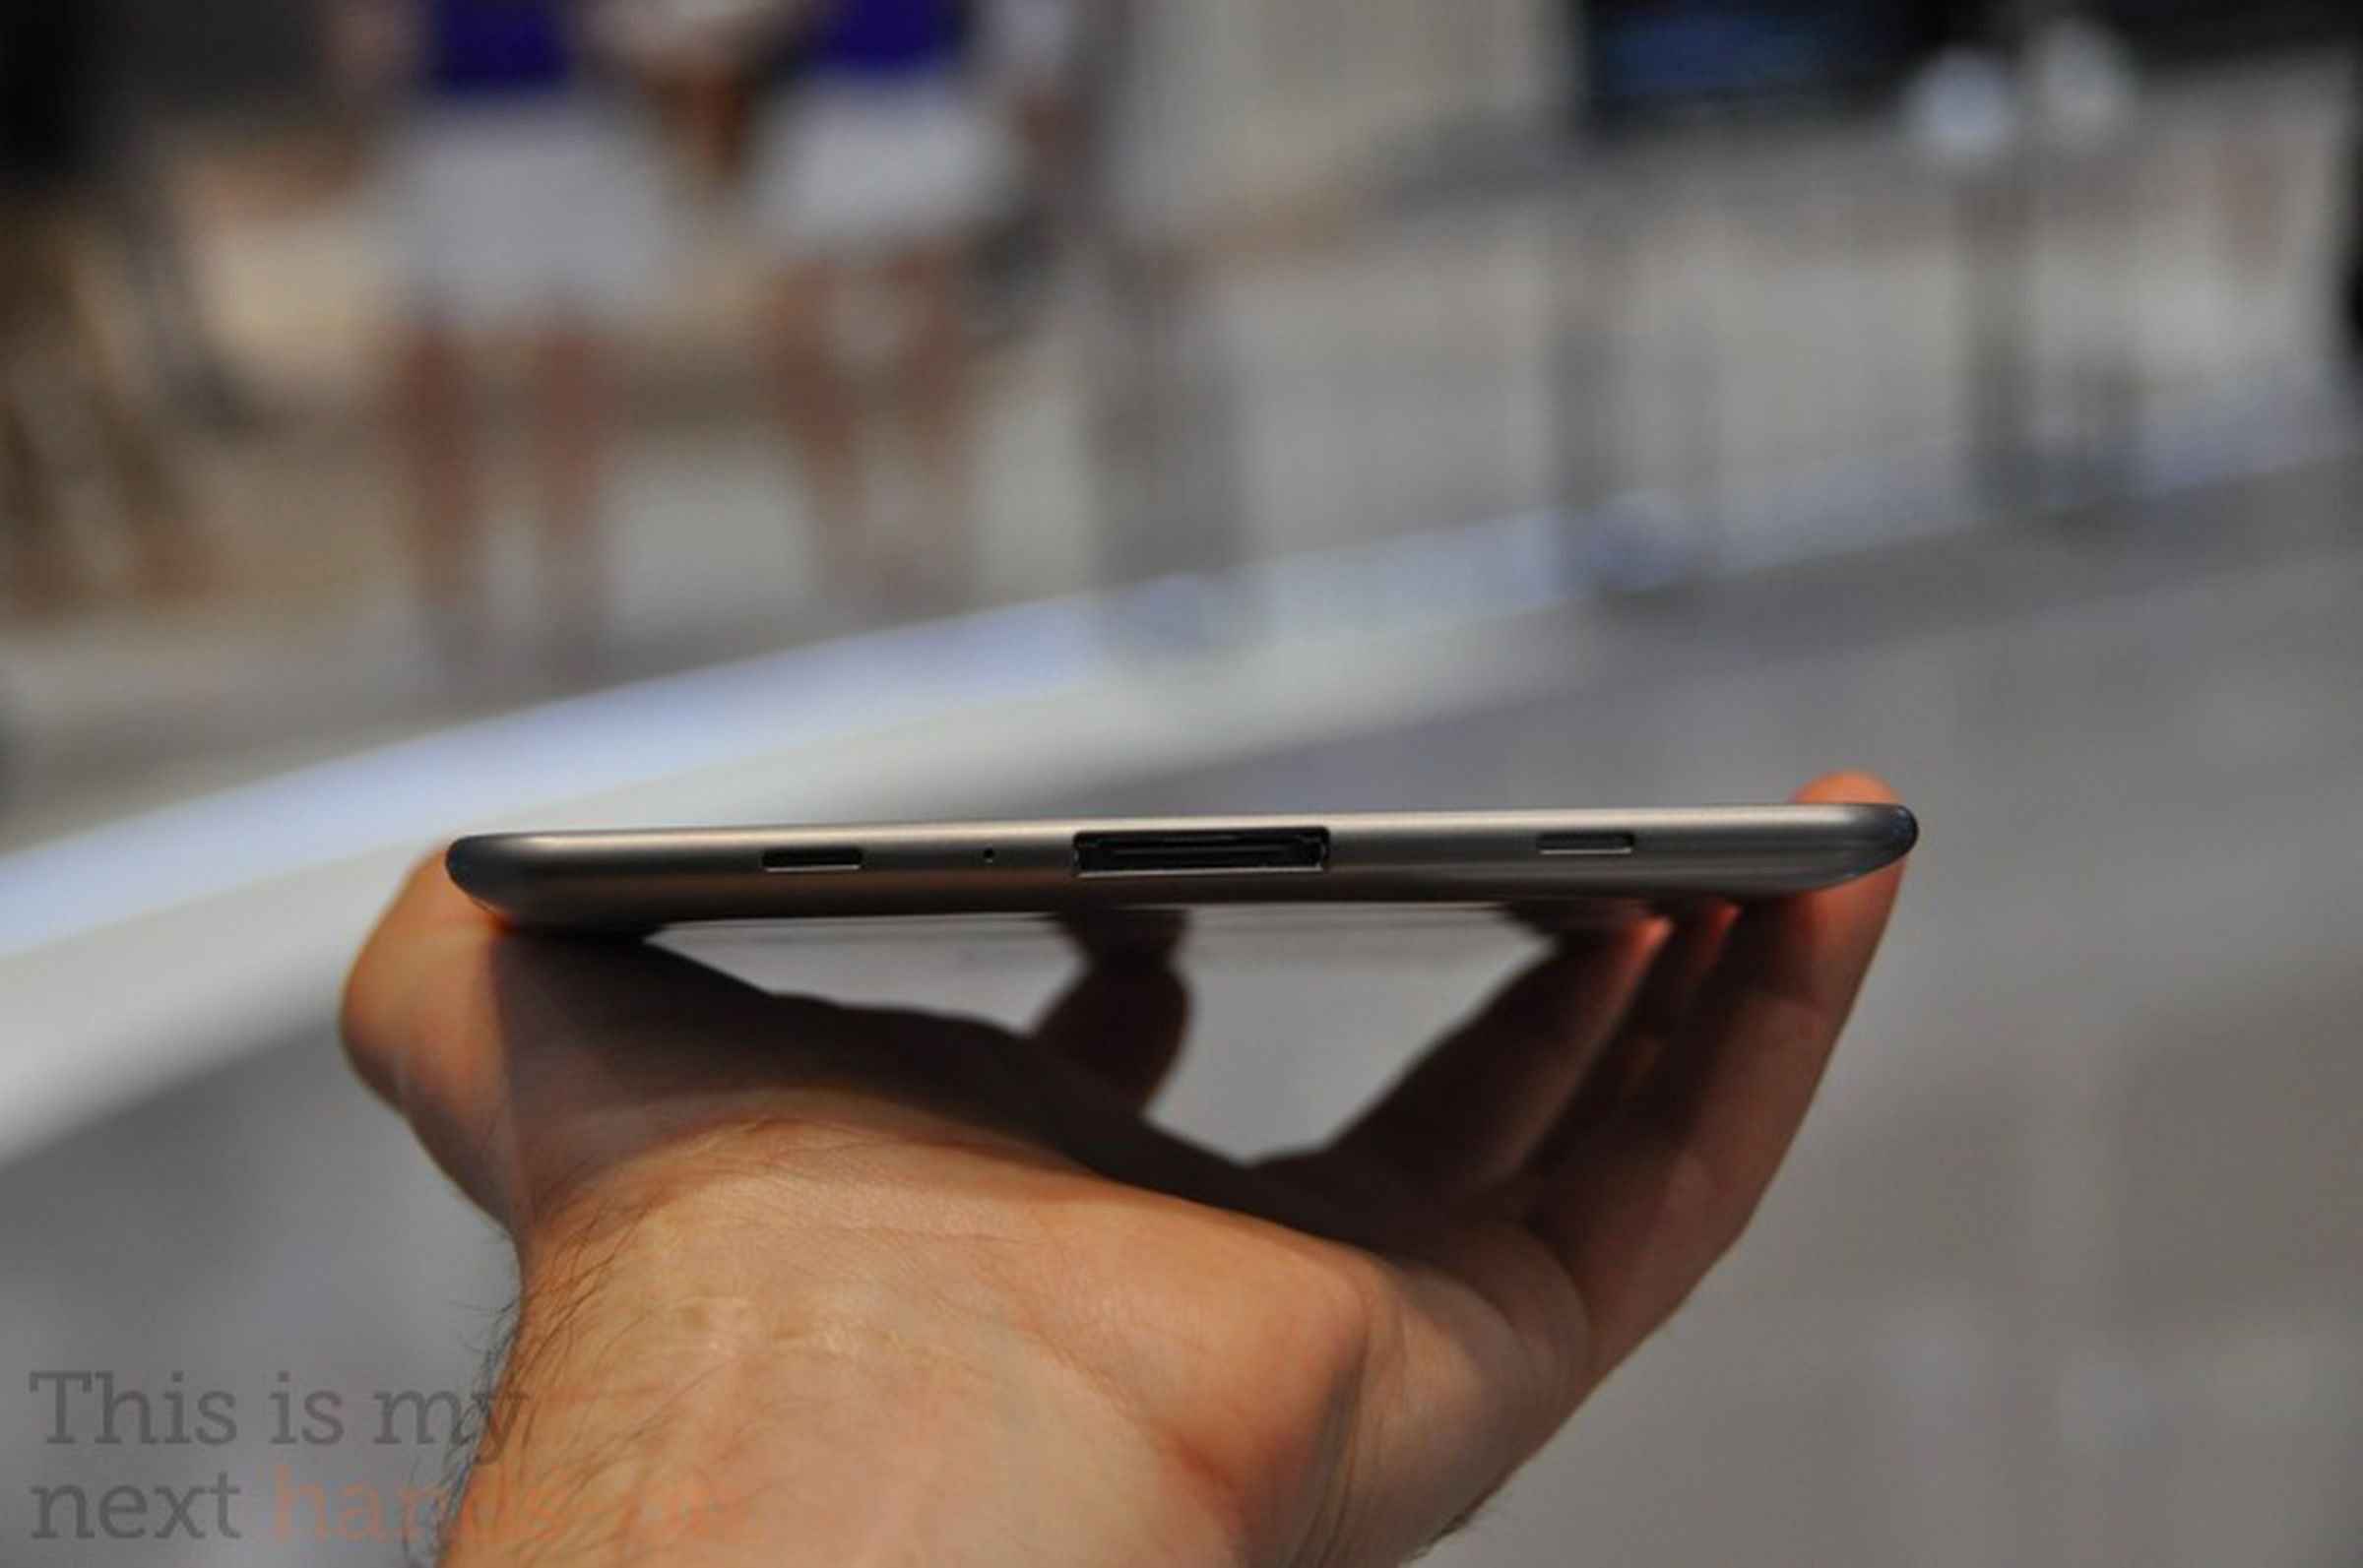 Samsung Galaxy Tab 7.7 hands-on photos